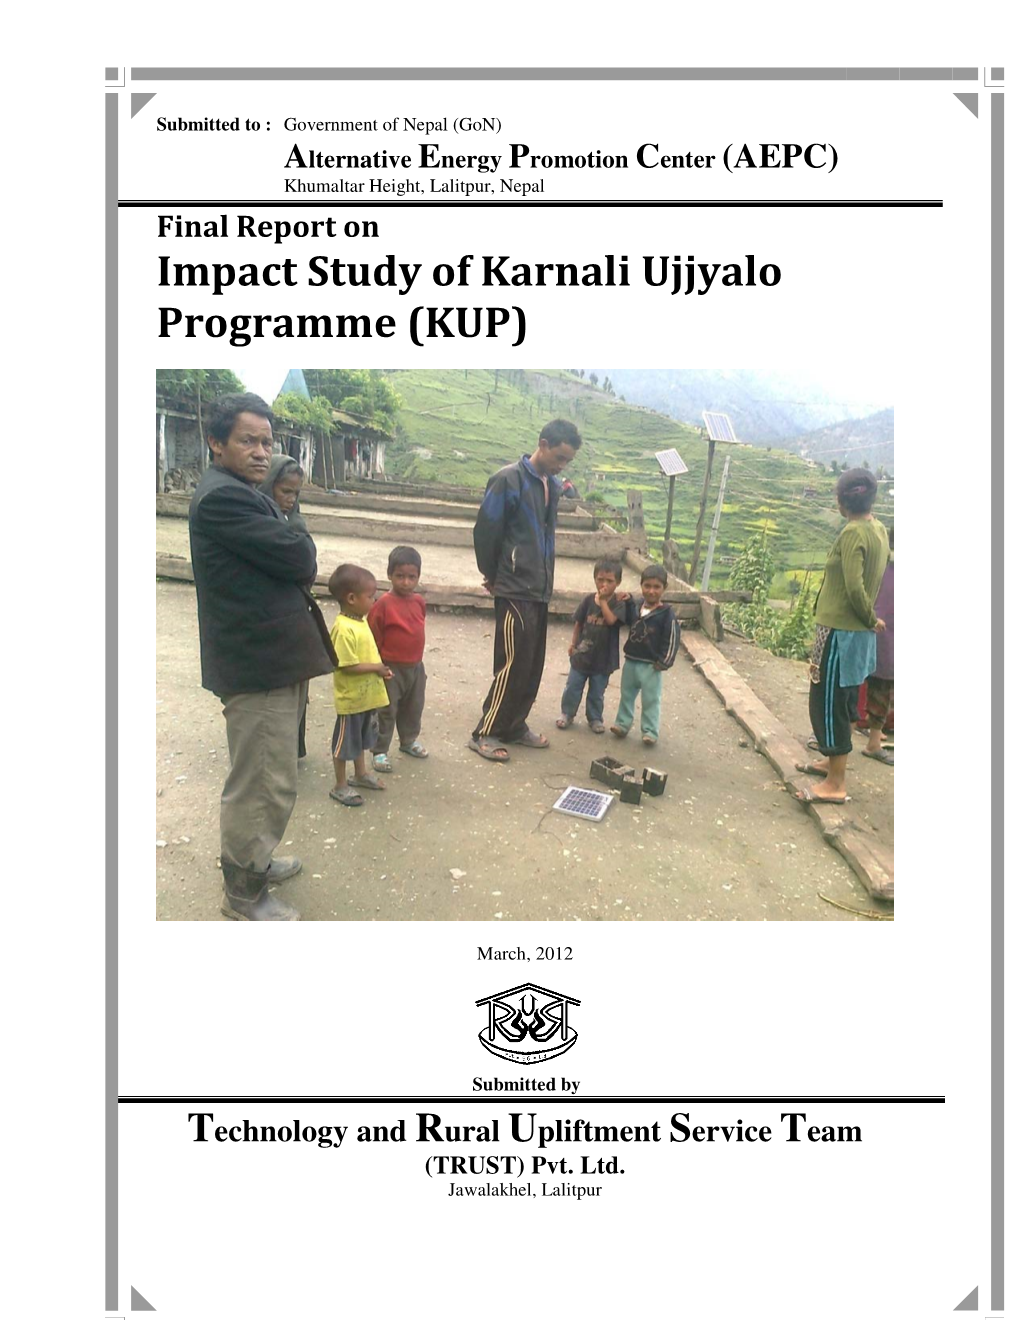 Impact Study of Karnali Ujjyalo Programme (KUP)